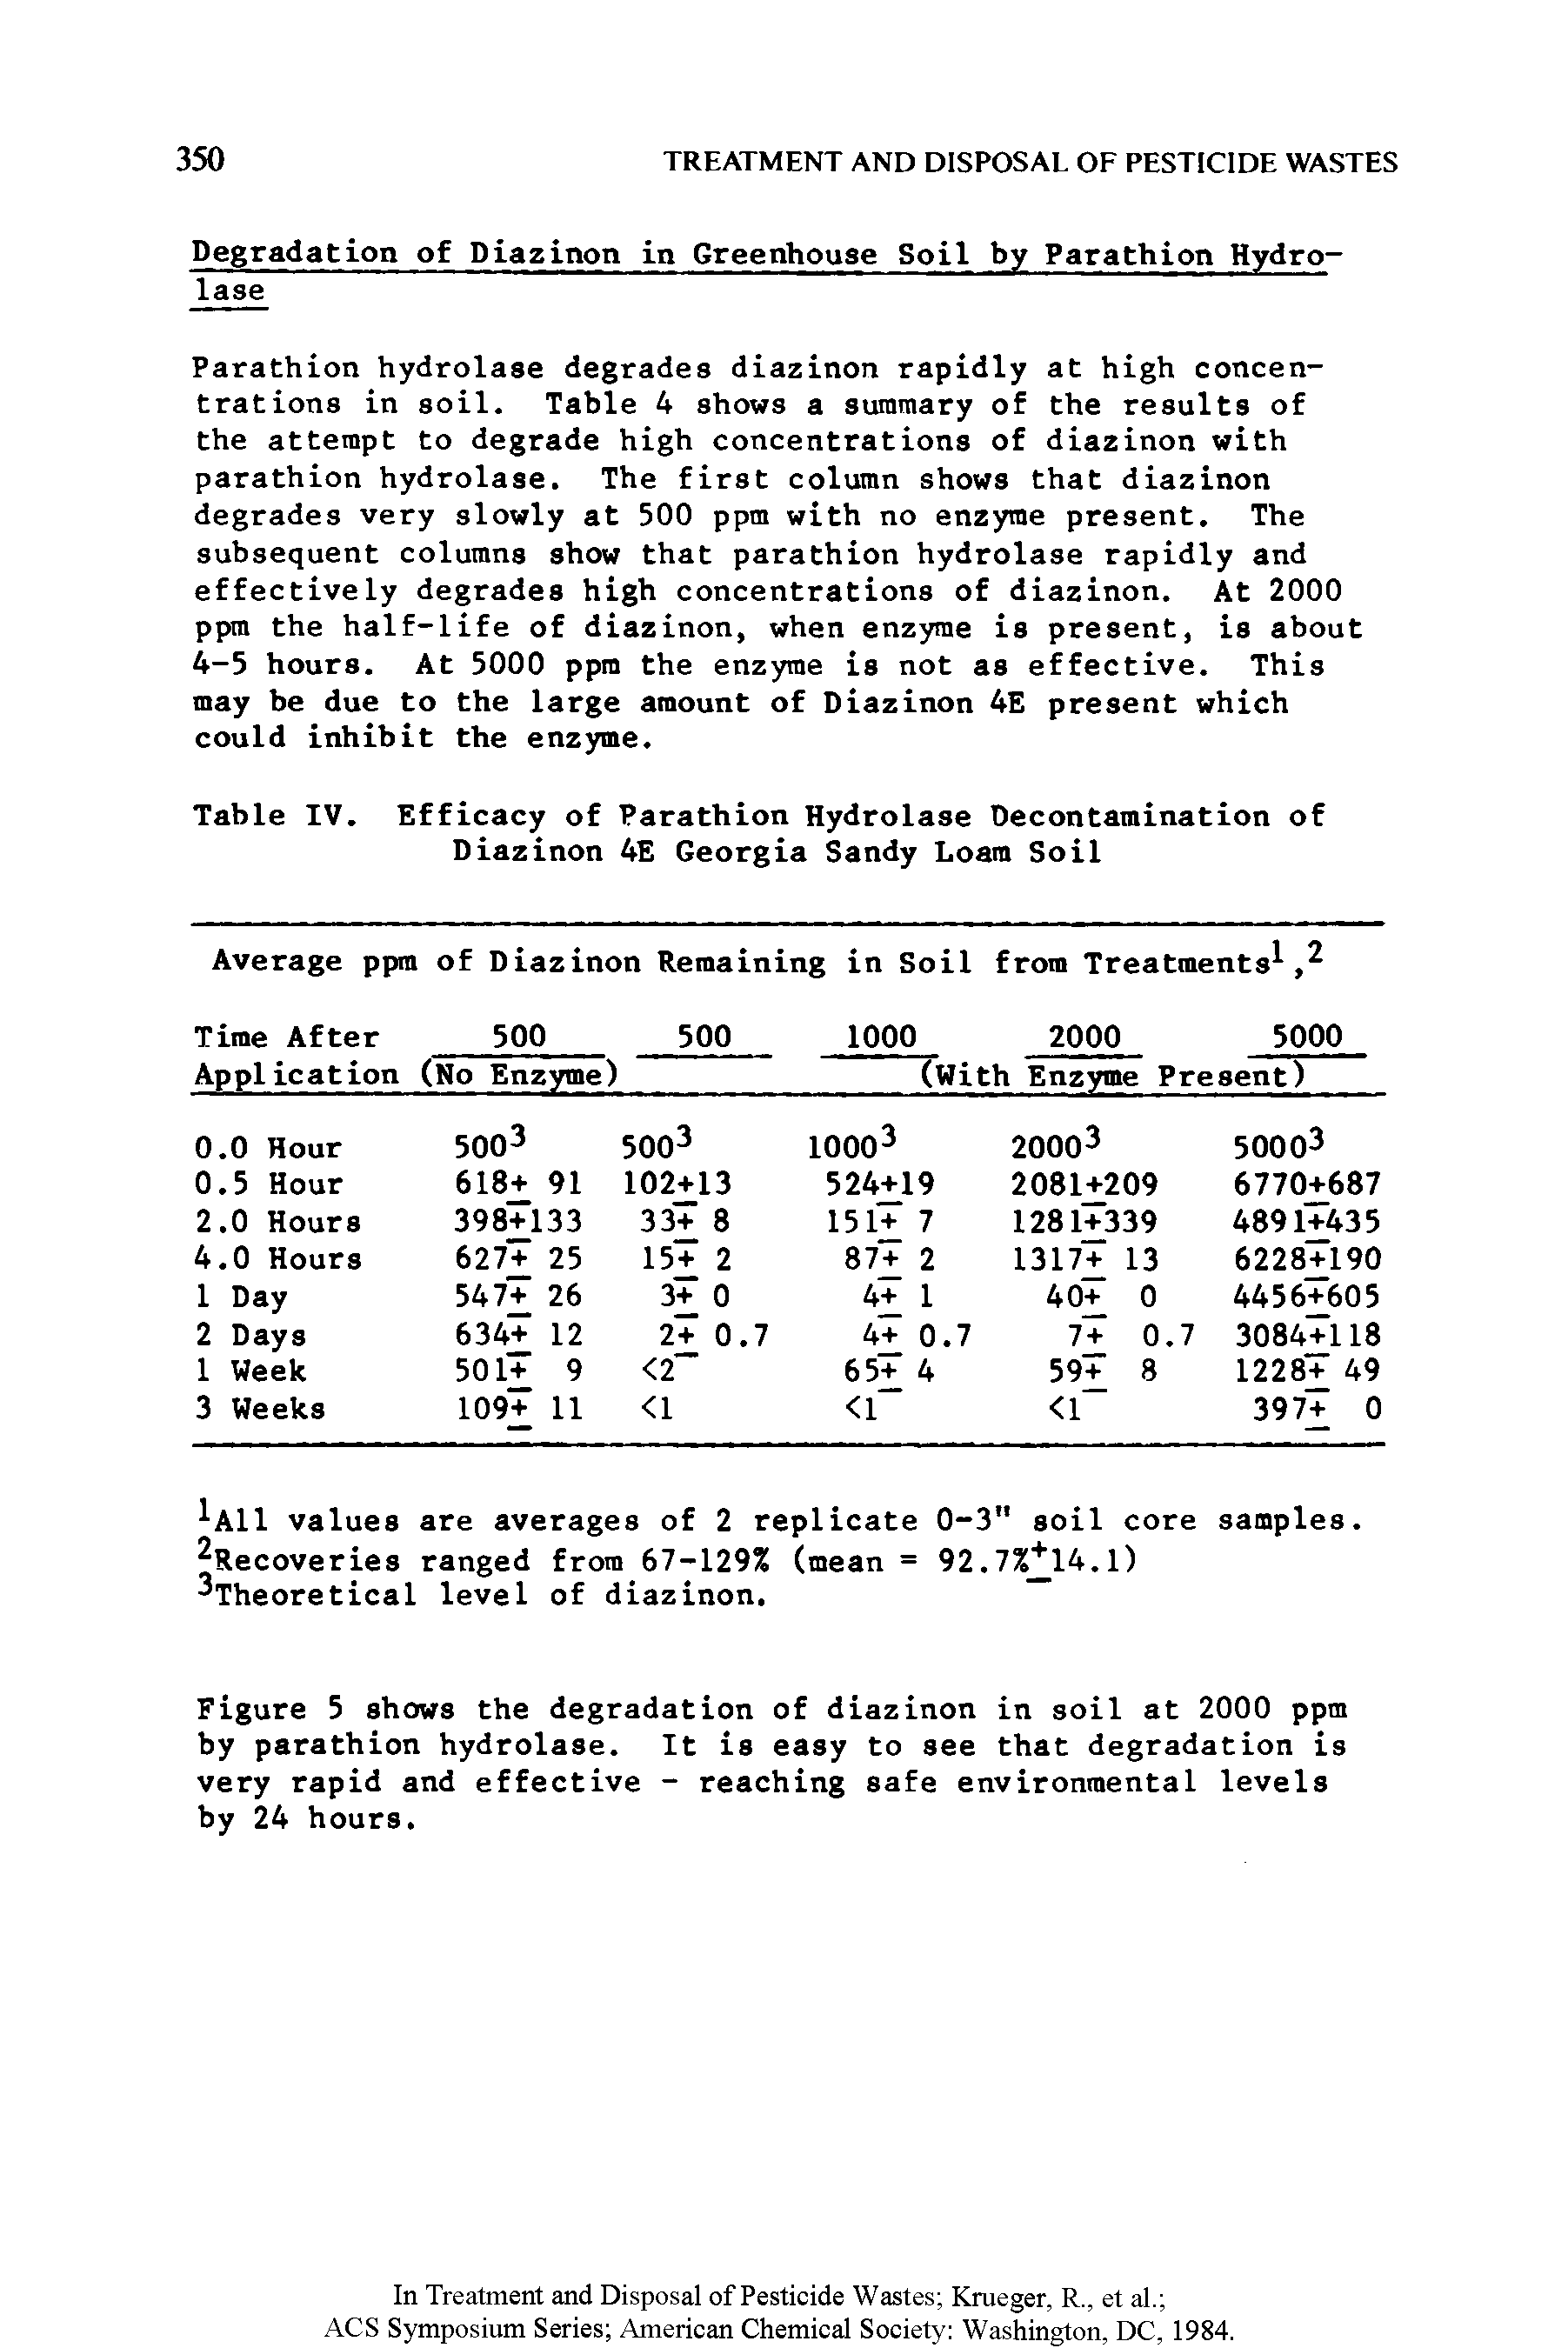 Table IV. Efficacy of Parathion Hydrolase Decontamination of Diazinon 4E Georgia Sandy Loam Soil...